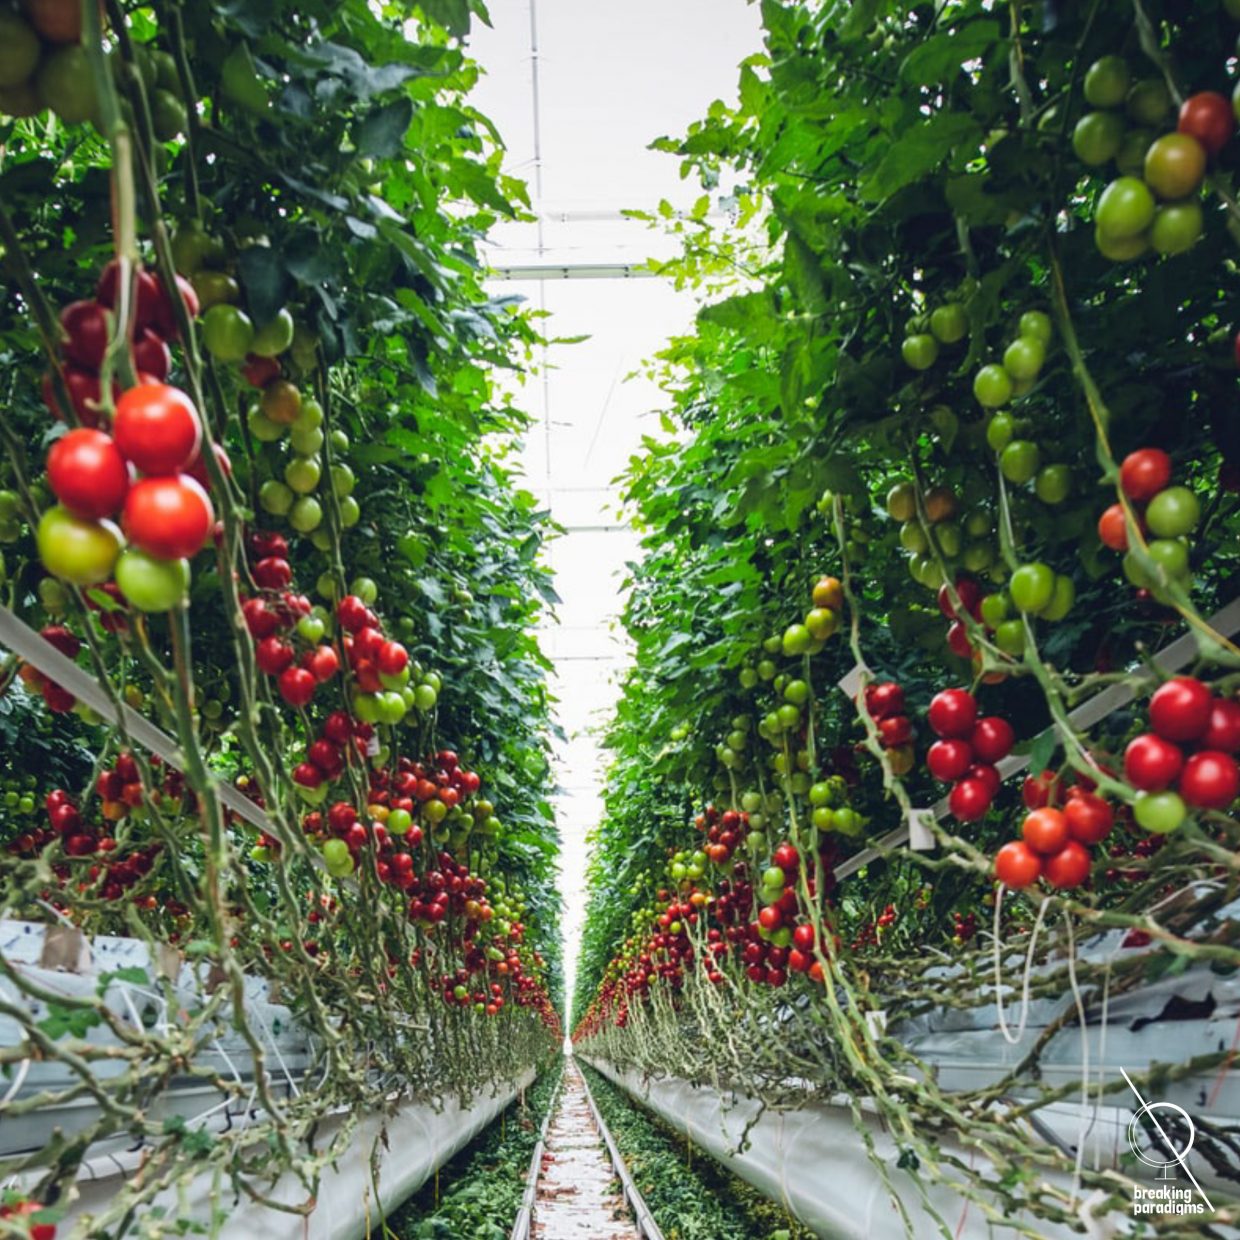 tomatoe plantation